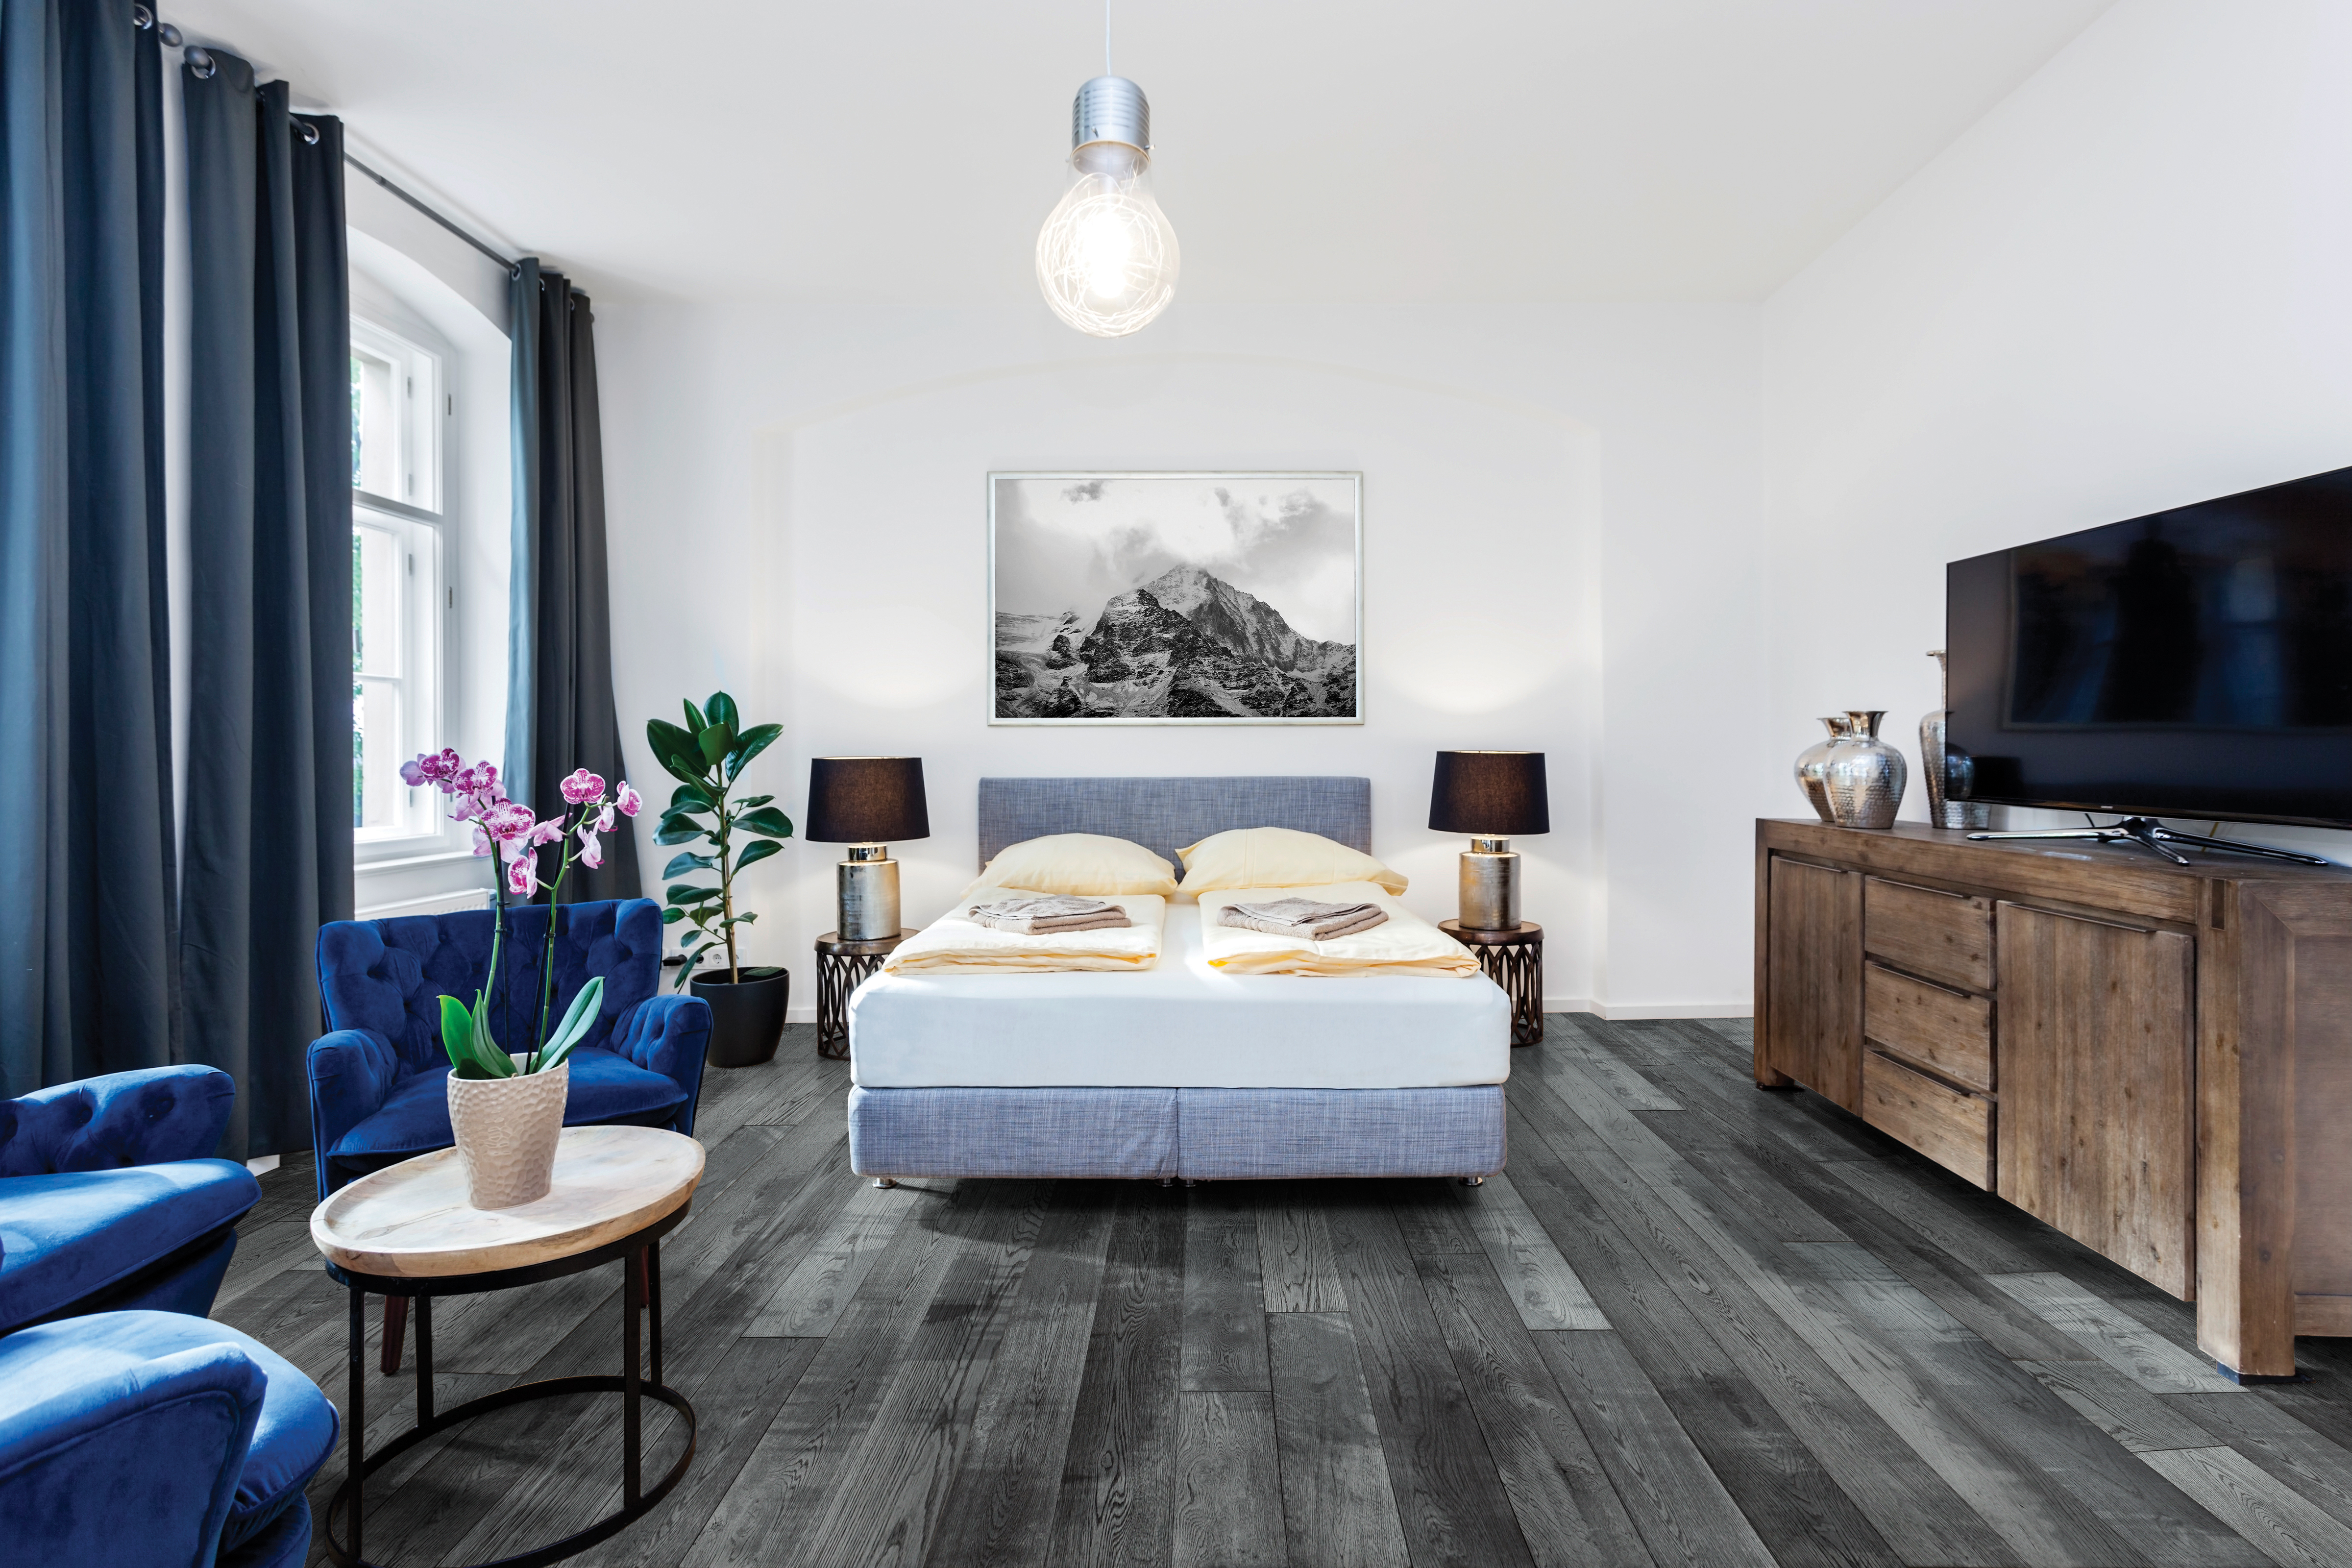 Image showing wood flooring in a bedroom.